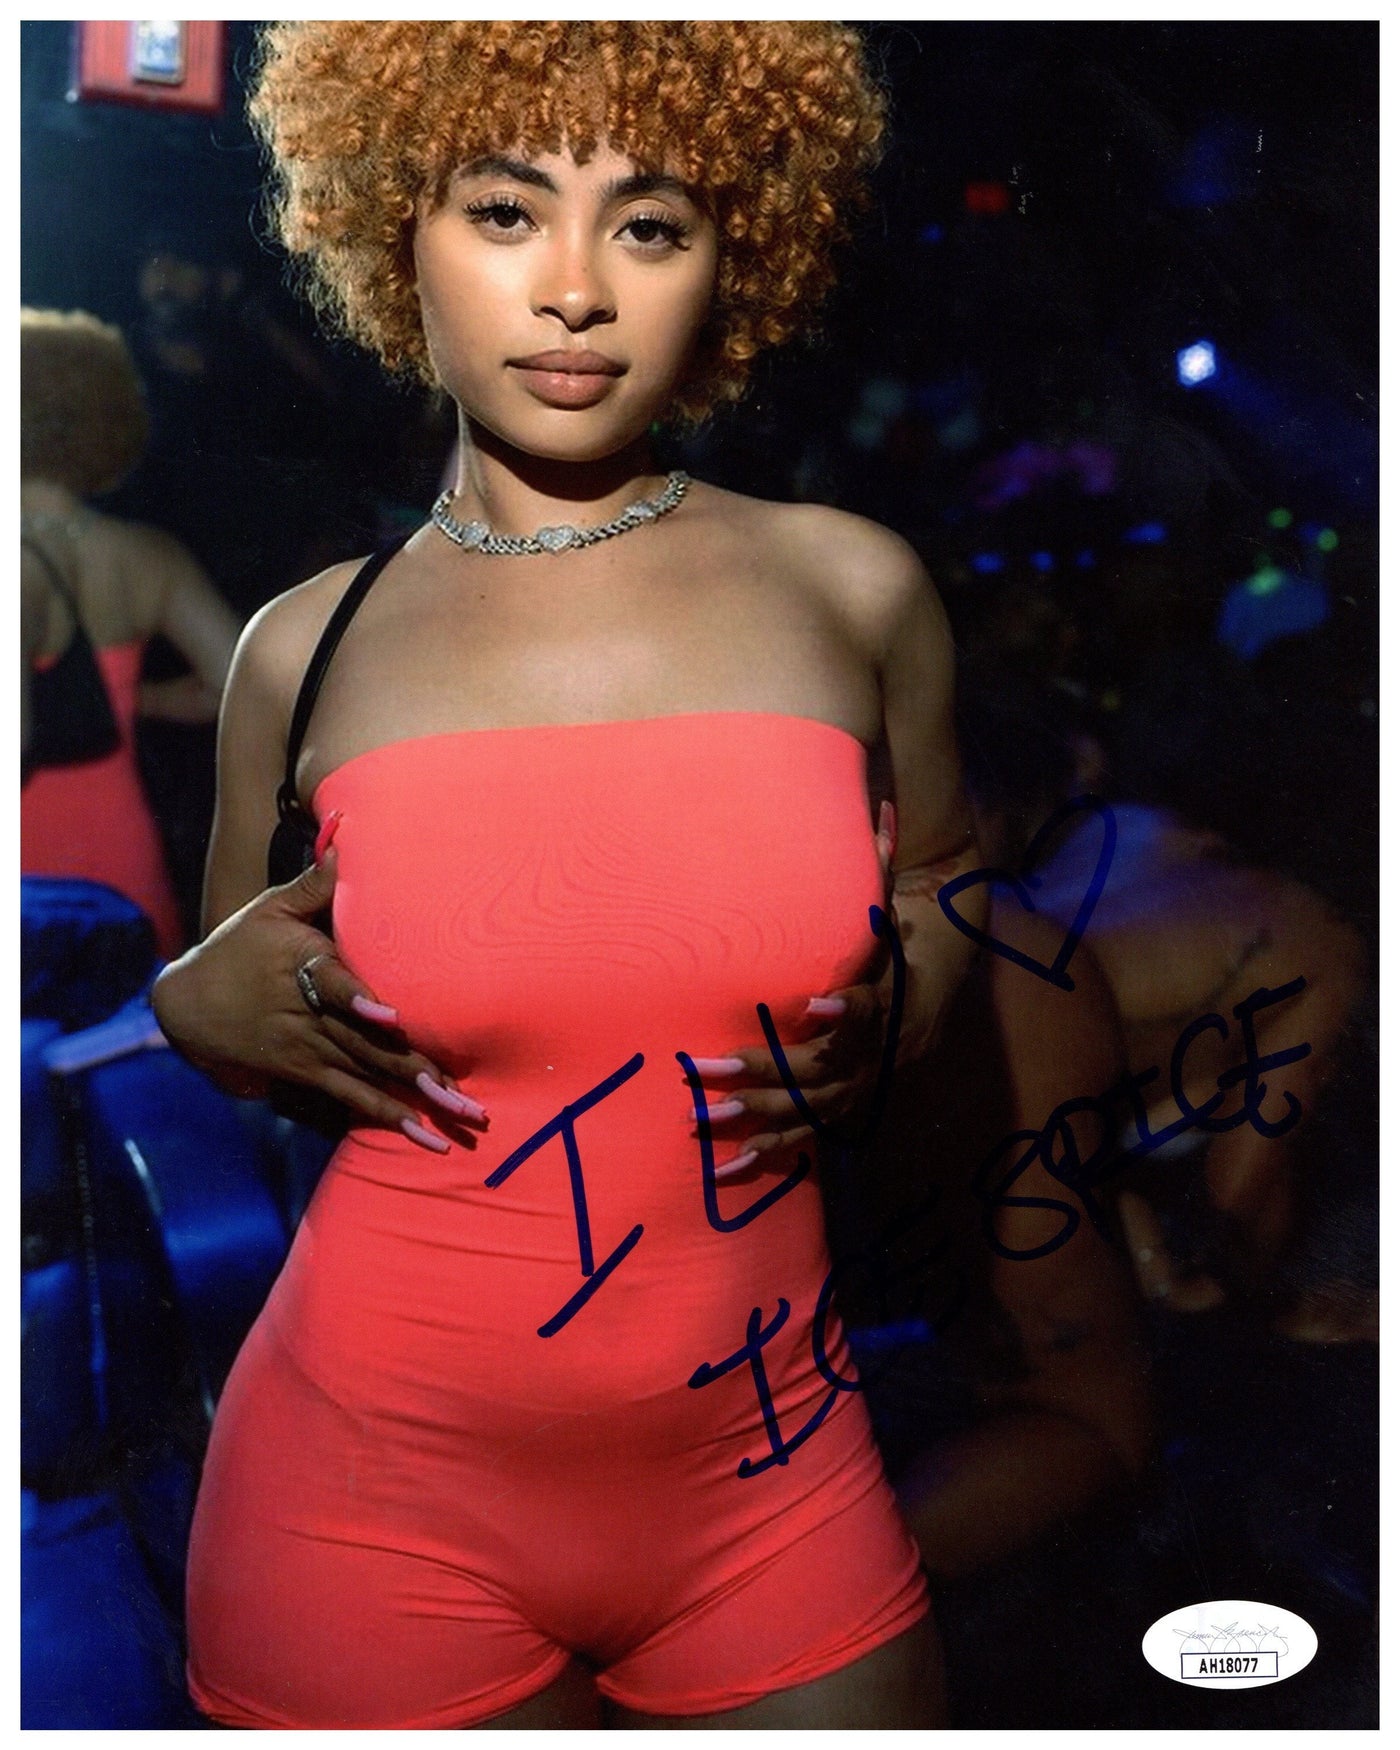 Ice Spice Signed 8x10 Photo Hip Hop Artist Autographed JSA COA #2